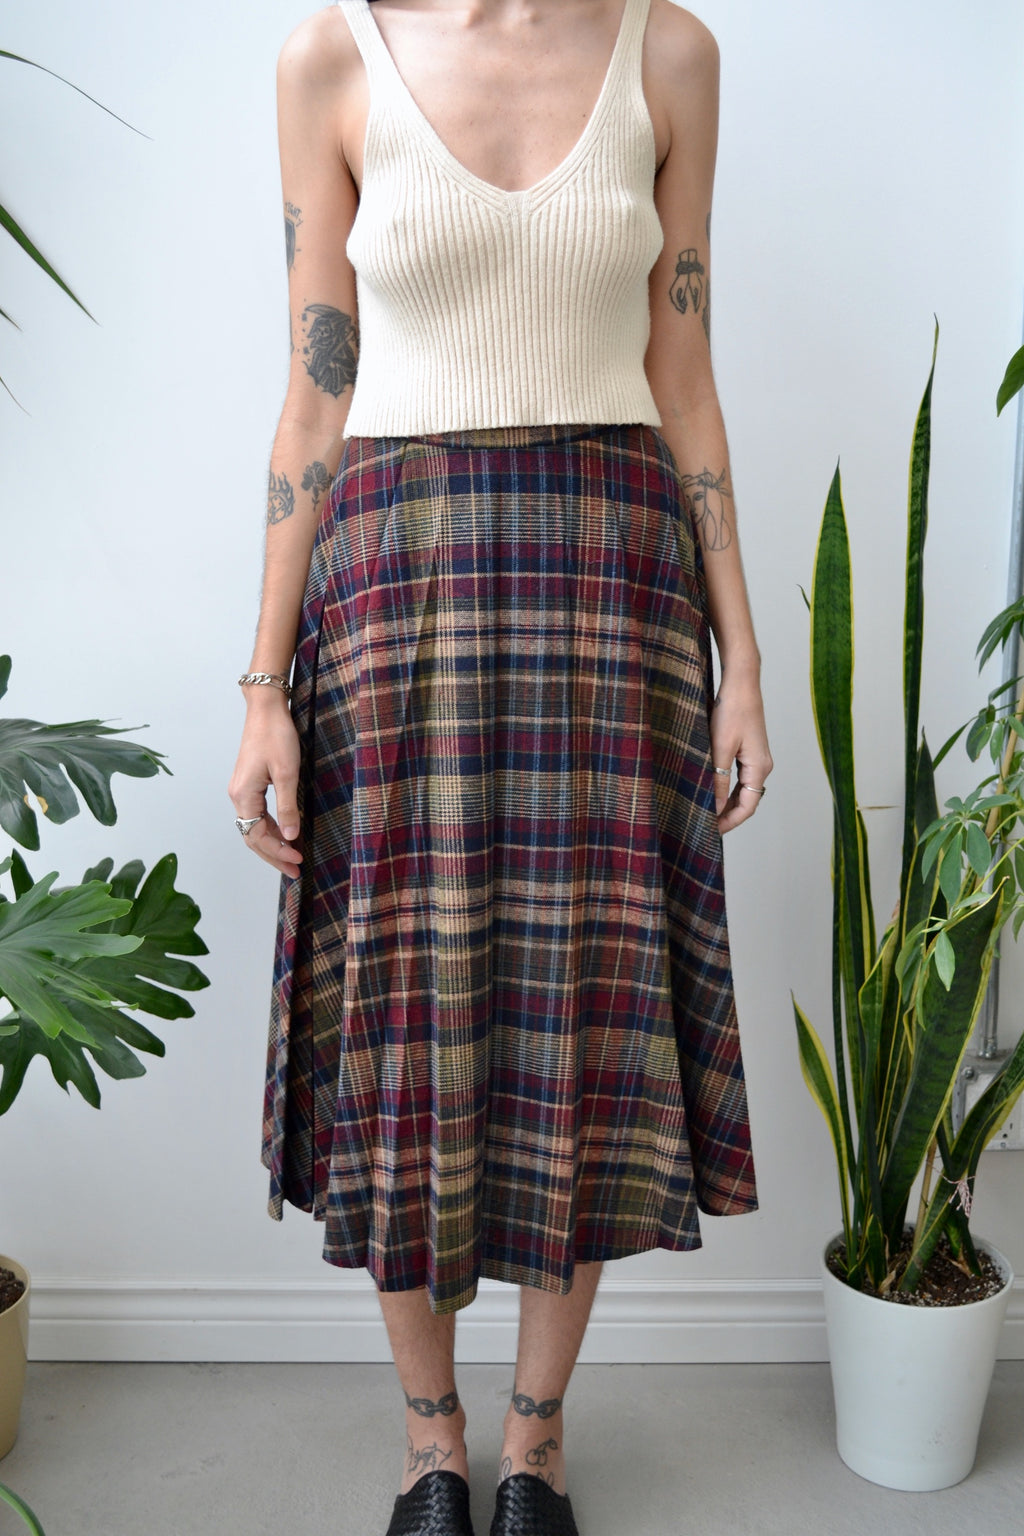 Soft Autumn Plaid Skirt